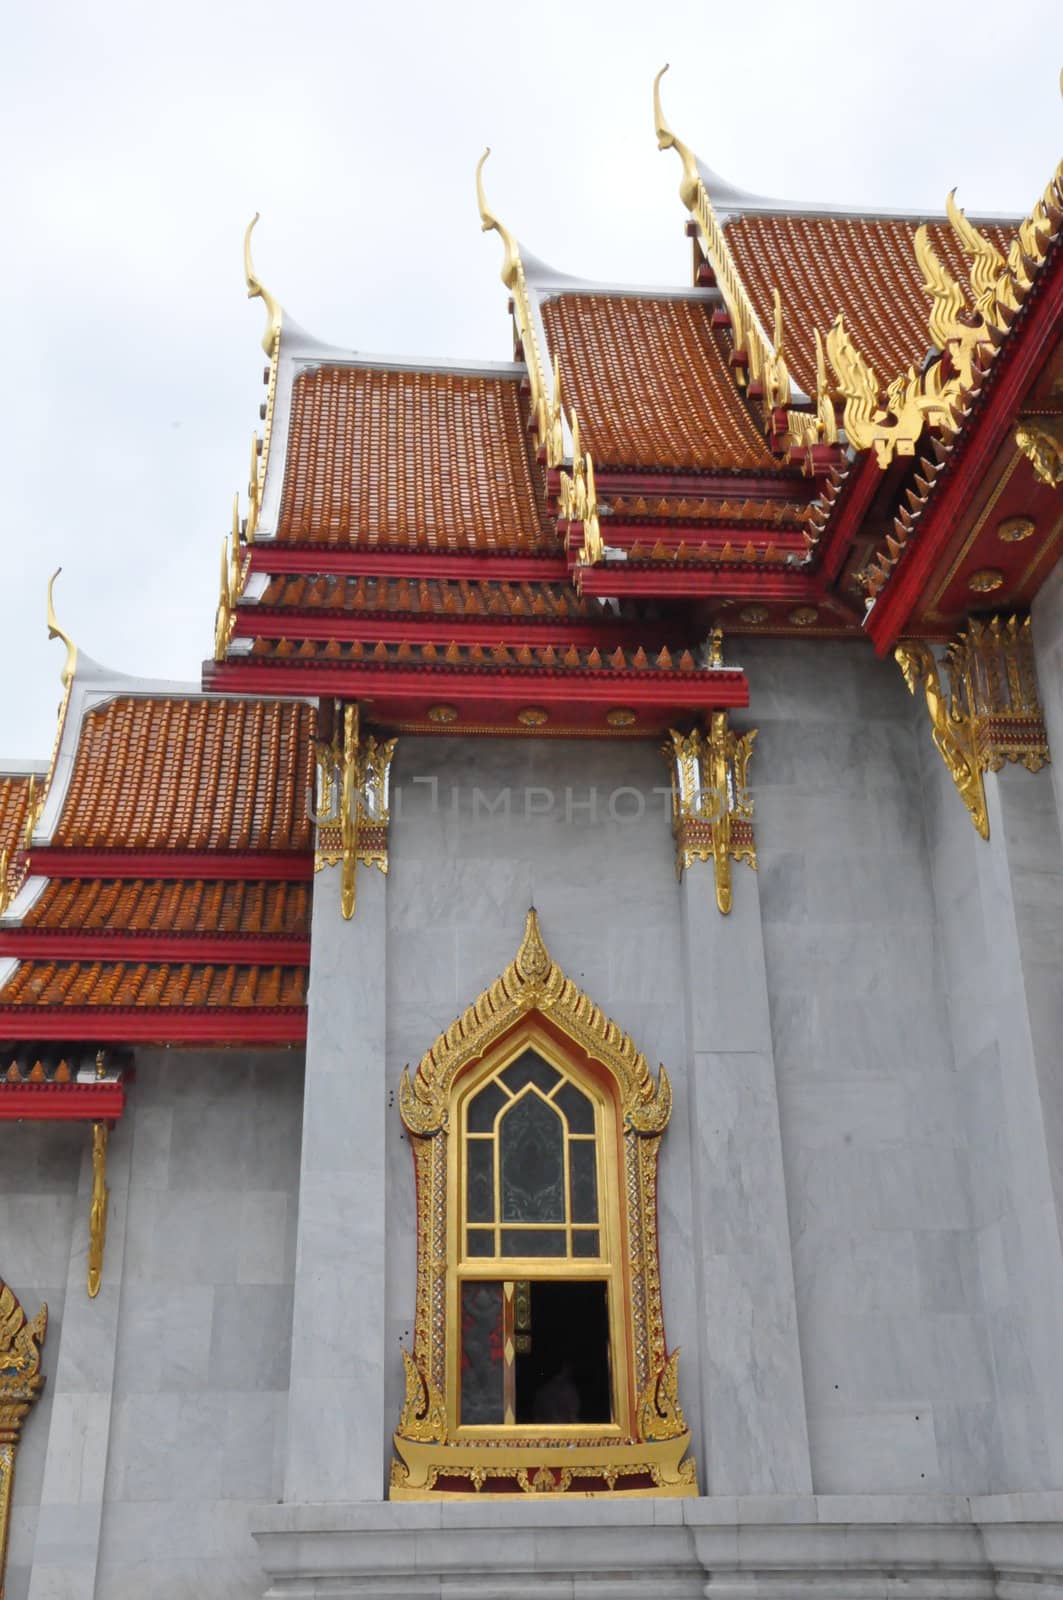 Wat Benchamabophit (Marble Temple) in Bangkok, Thailand